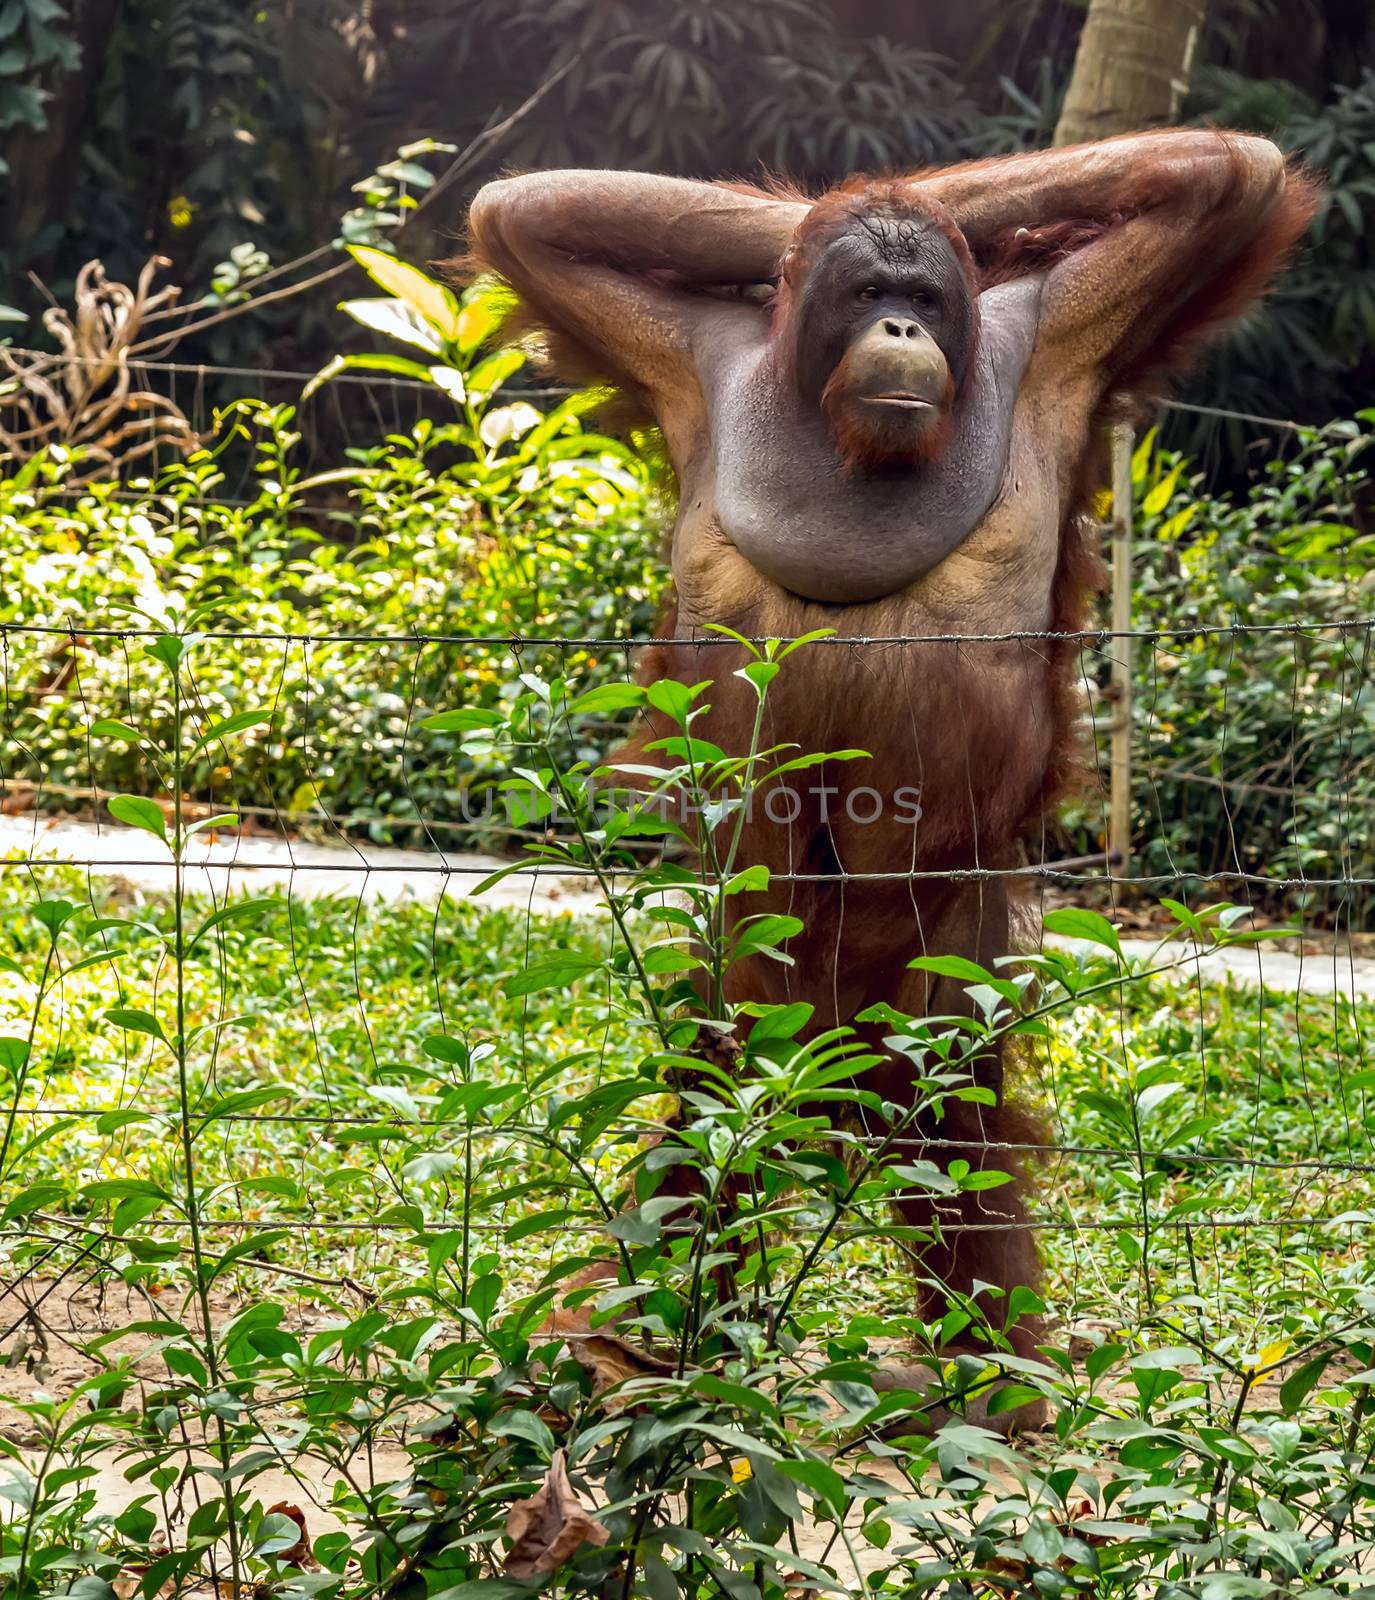 Orangutan face view in the zoo scene view